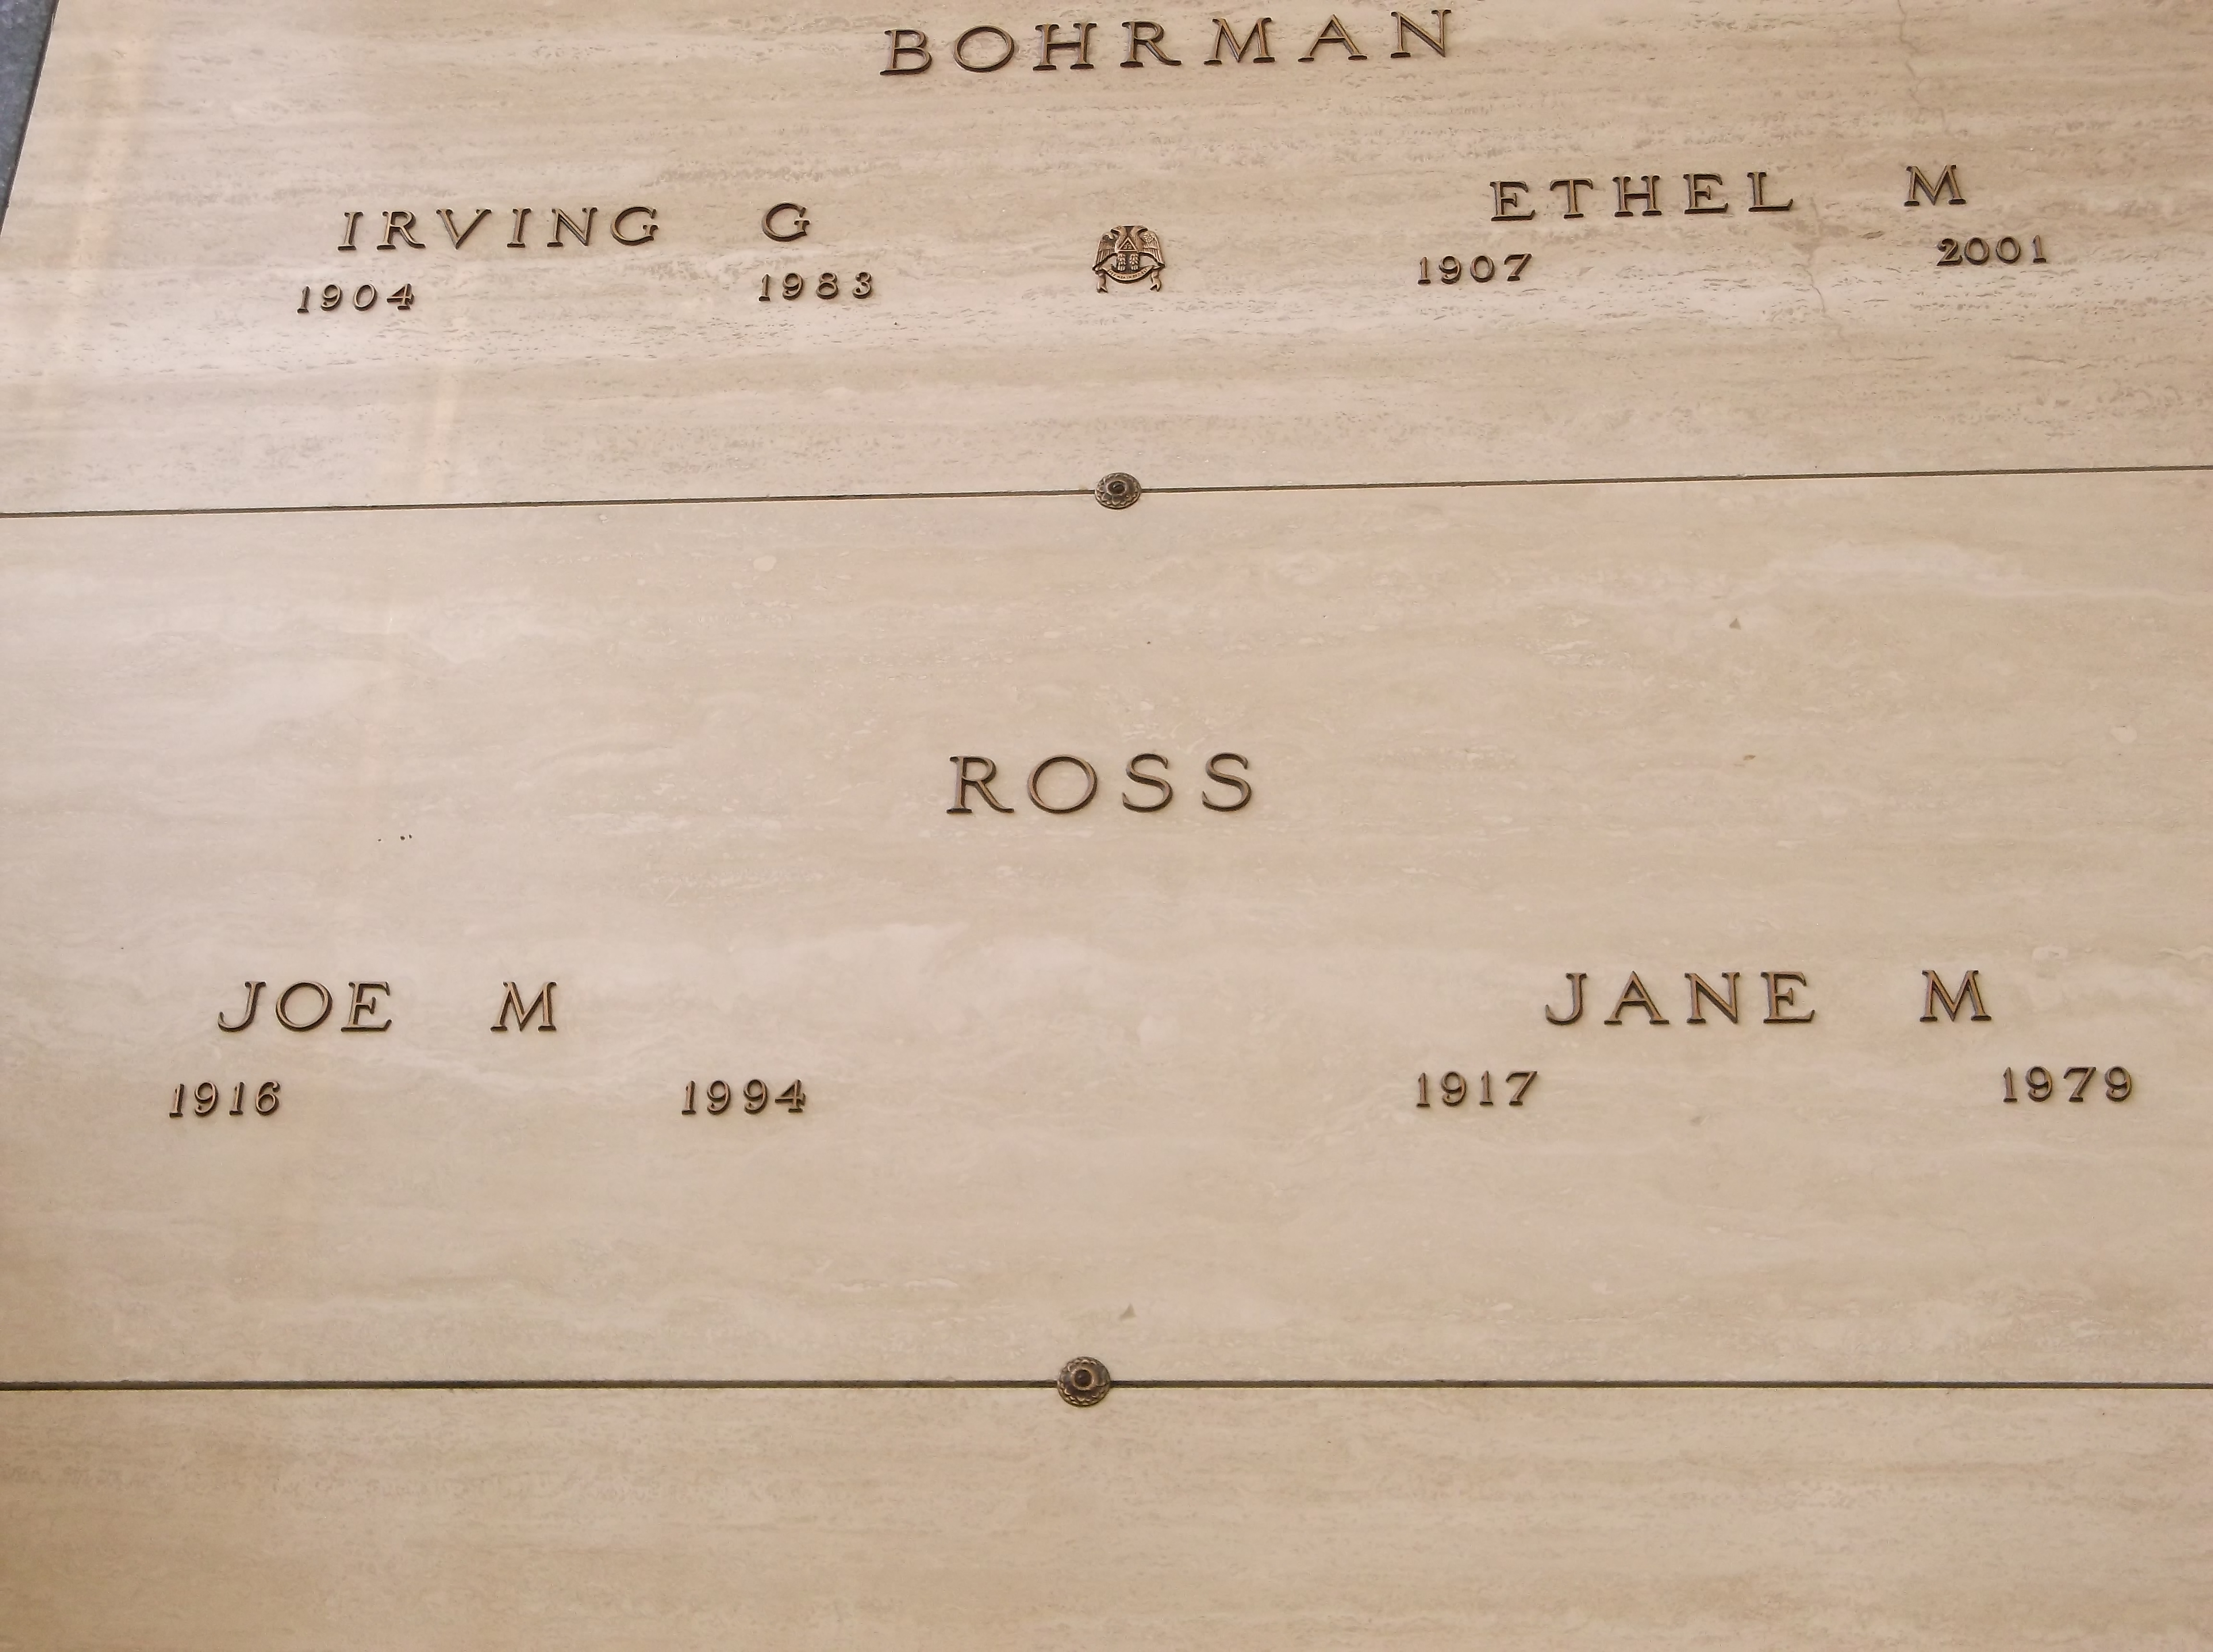 Jane M Ross